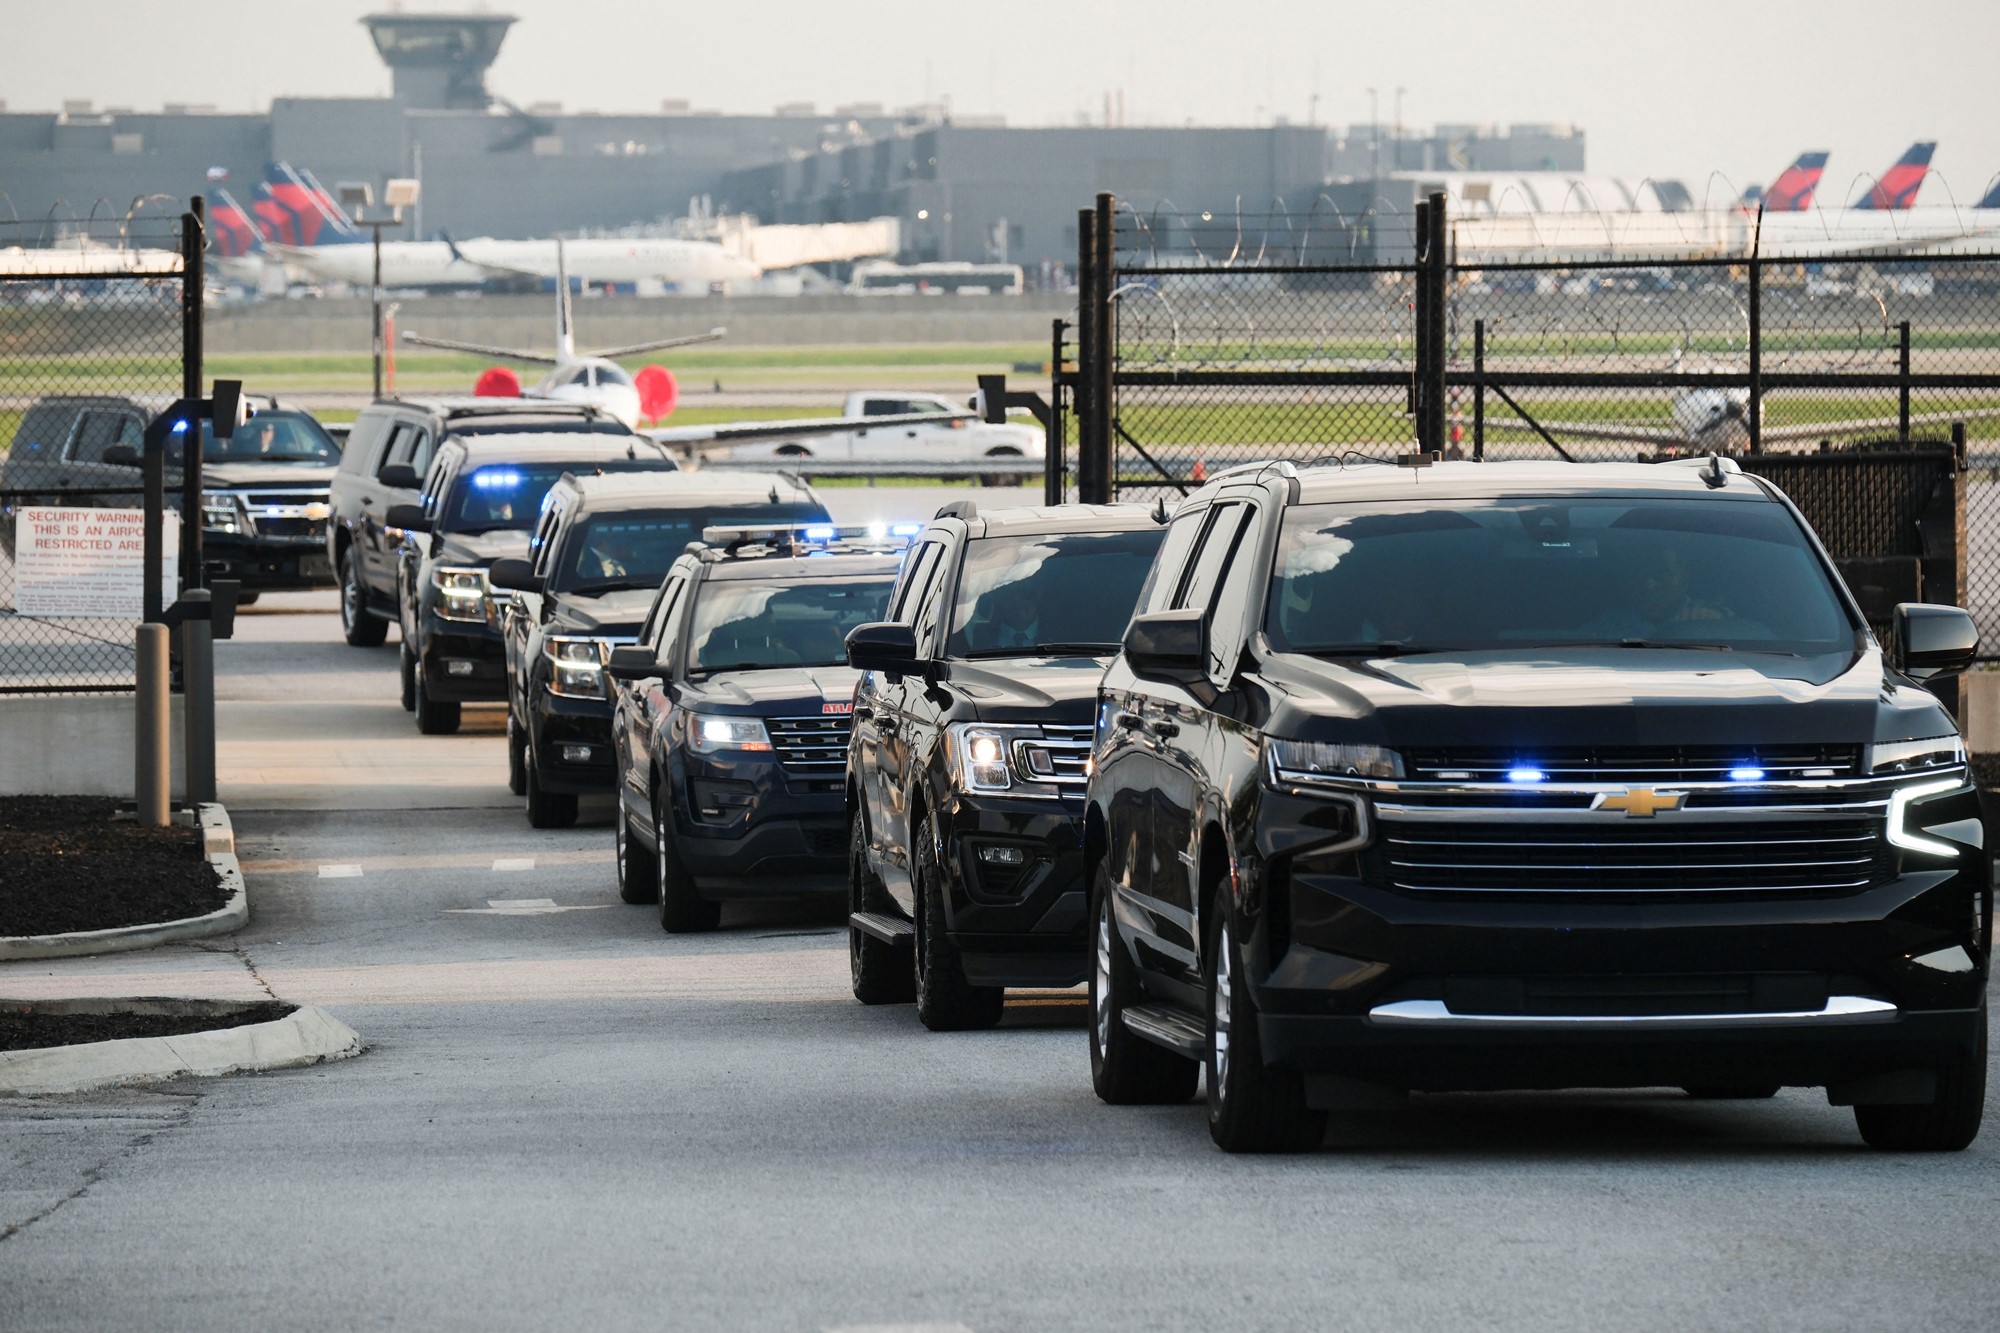 Members of security forces ride motorcycles as former U.S. President Donald Trump departs Atlanta Hartsfield-Jackson International Airport